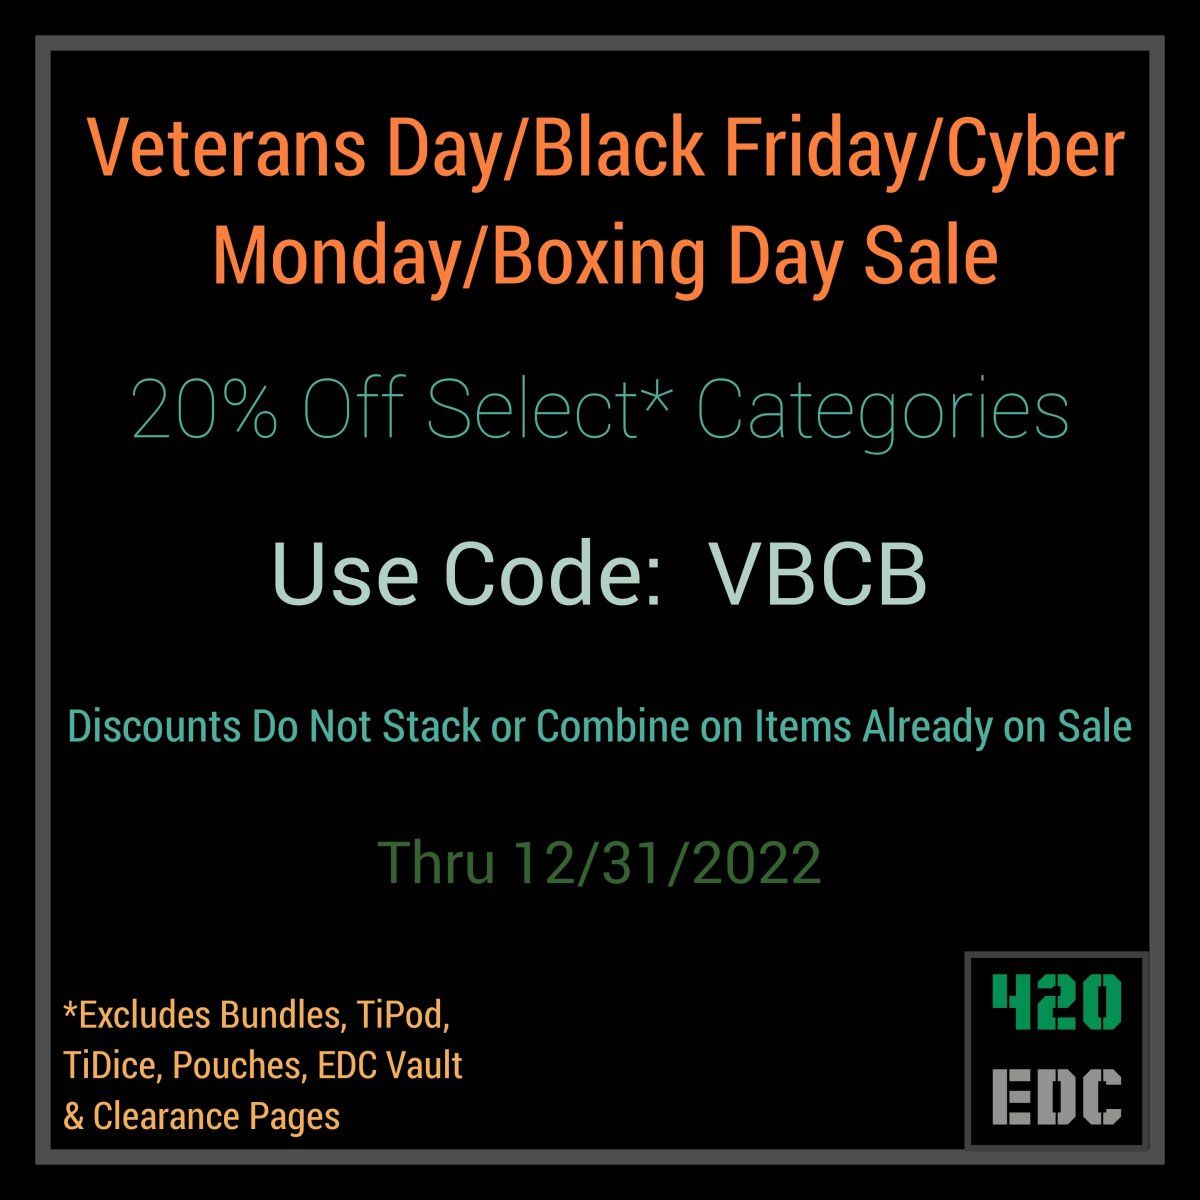 VBCB Sale 420EDC.jpg